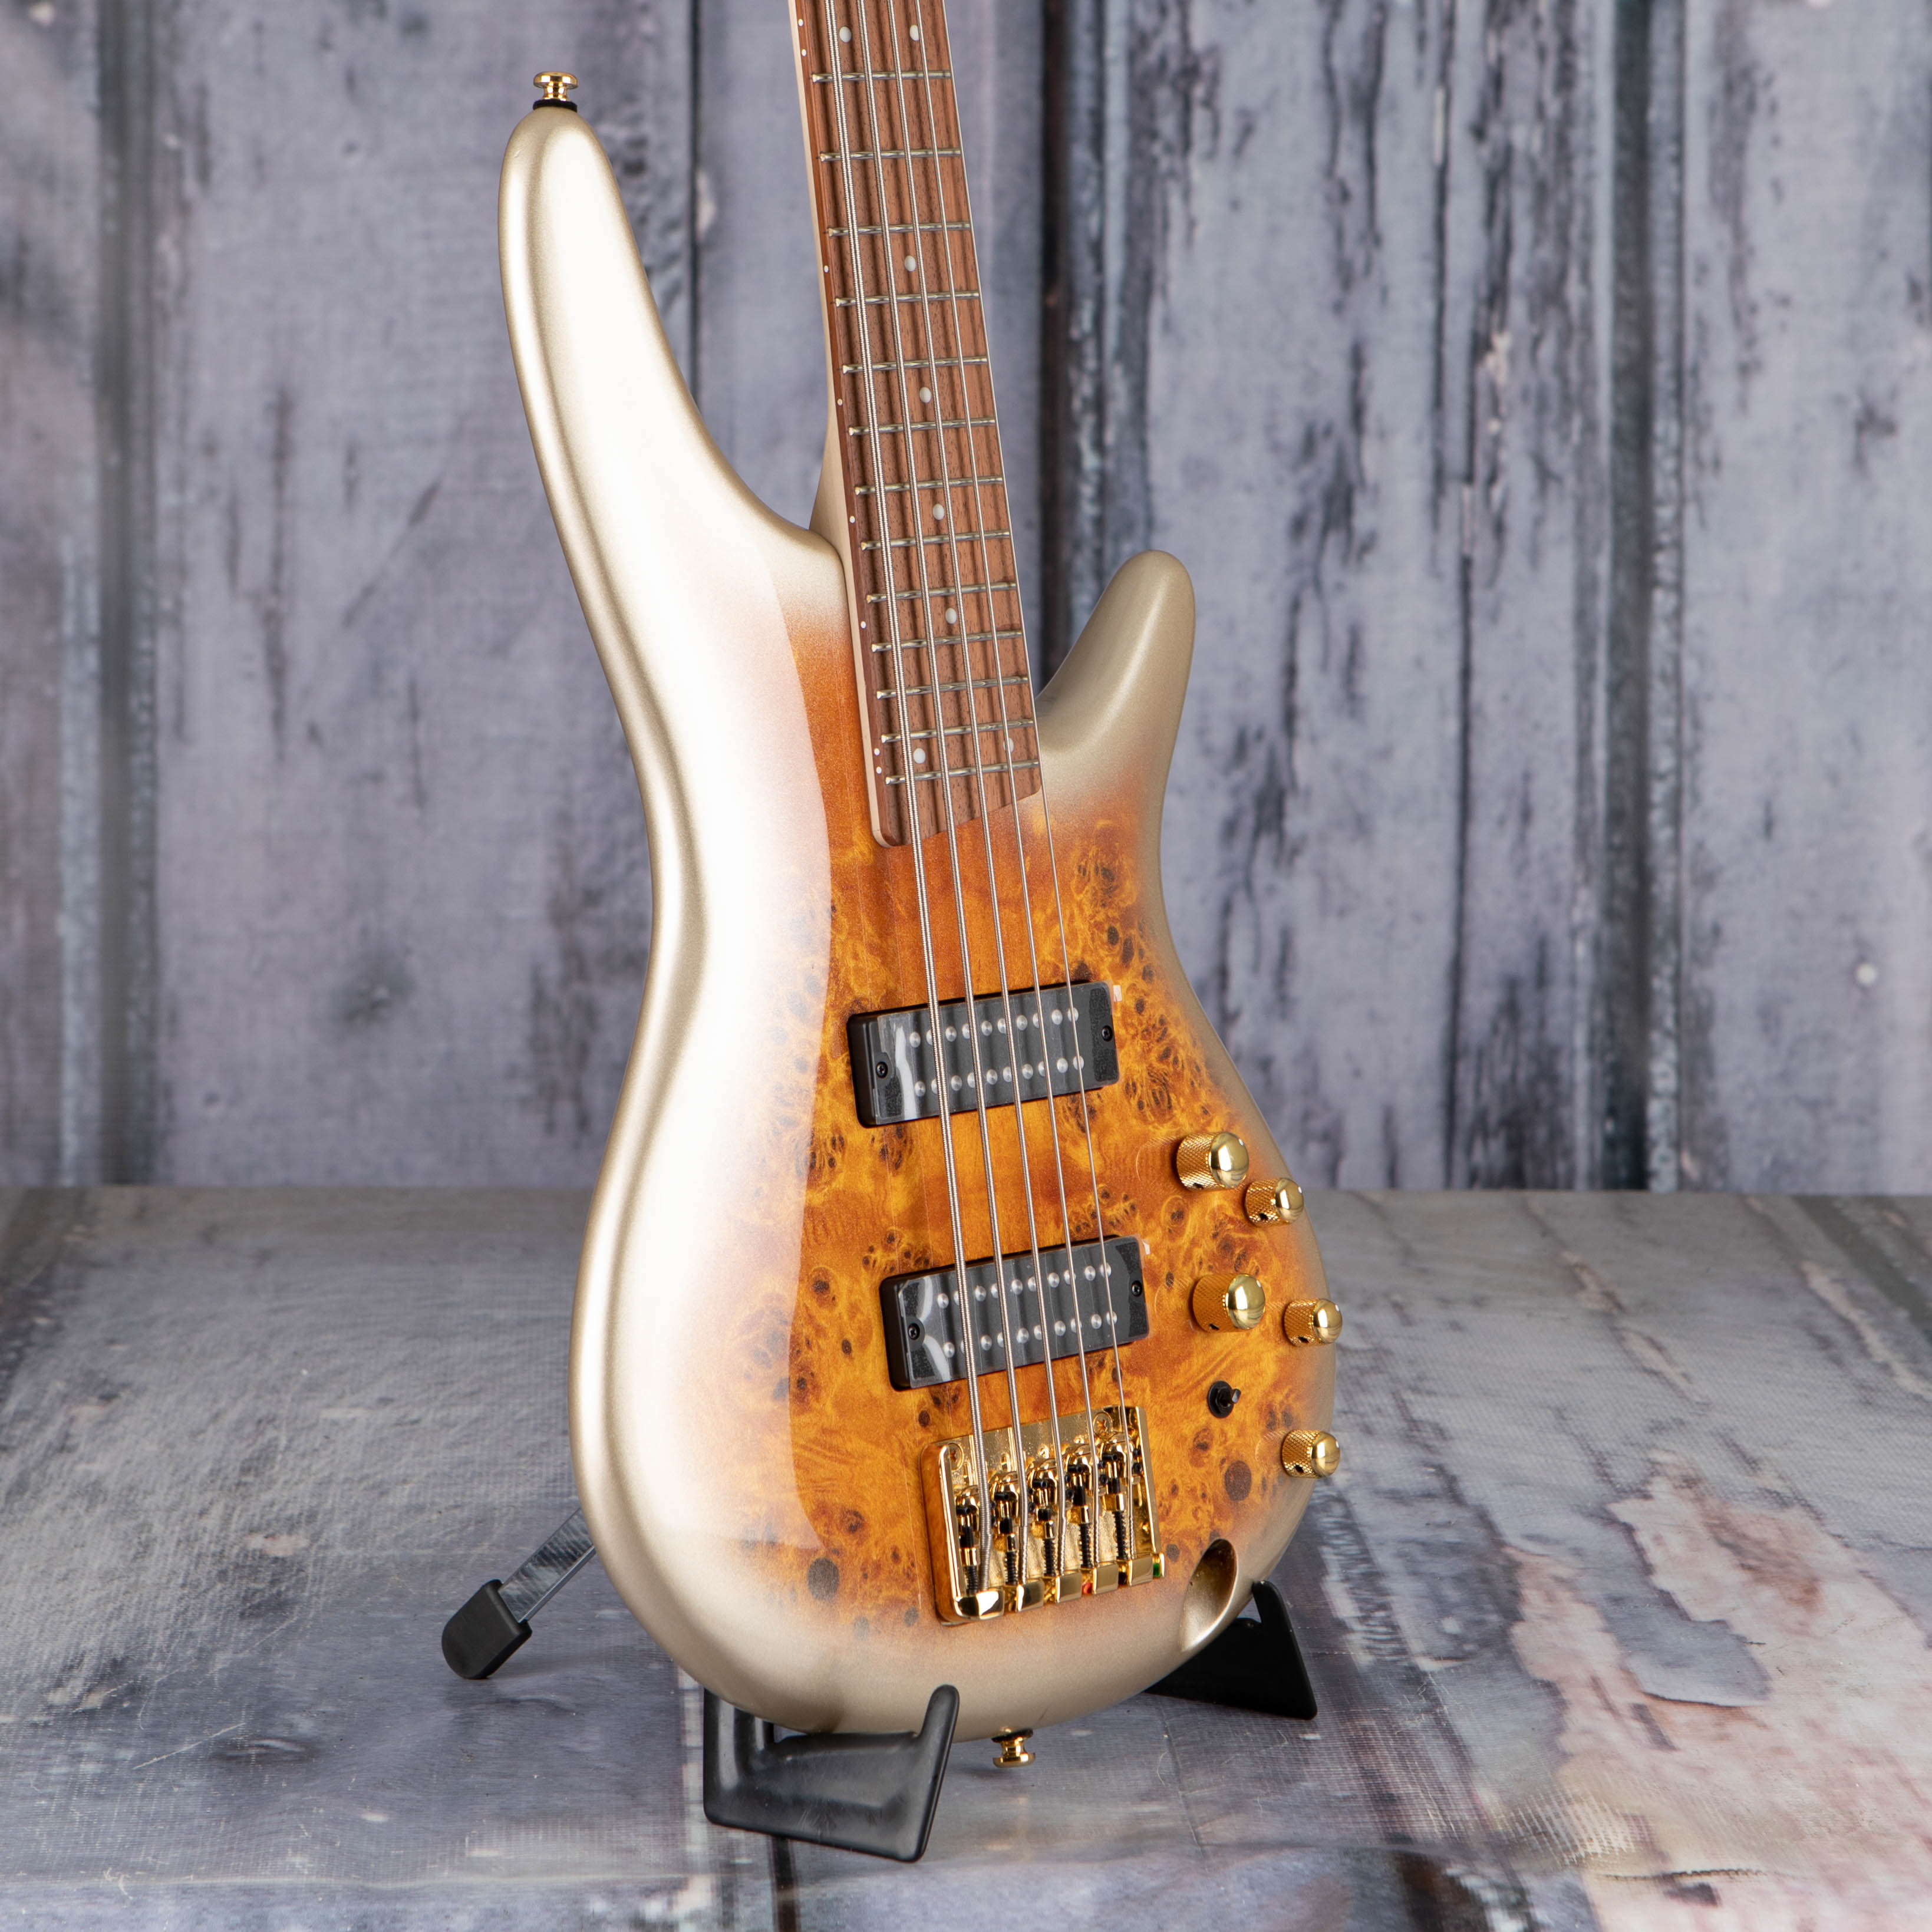 Ibanez Standard SR405EPBDX 5-String Electric Bass Guitar, Mars Gold Metallic Burst, angle